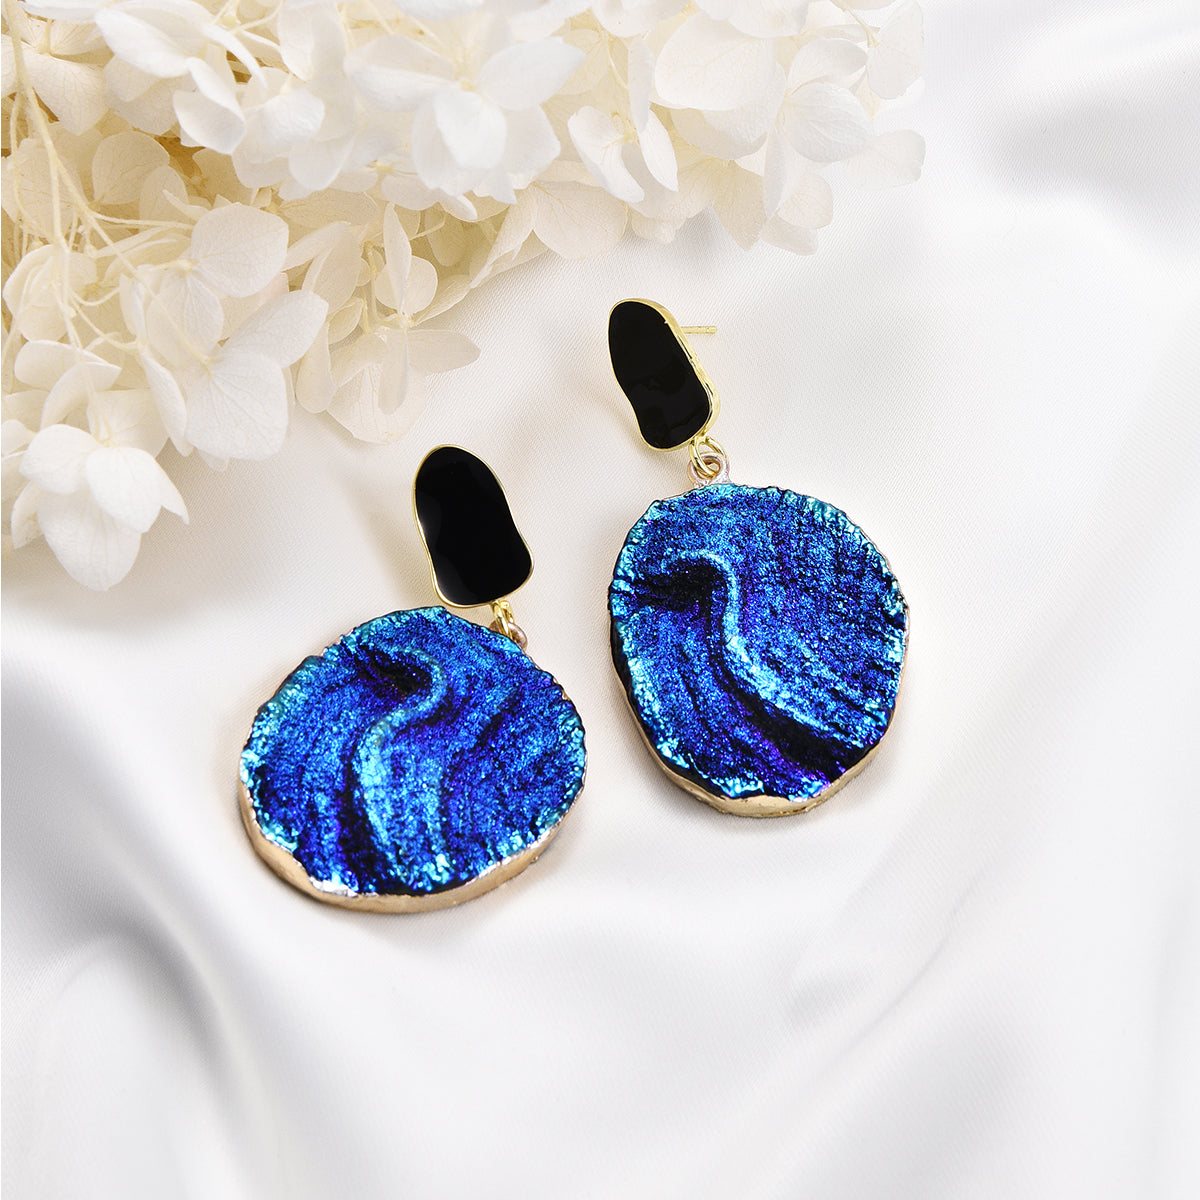 Elegant blue asteroid shaped earrings